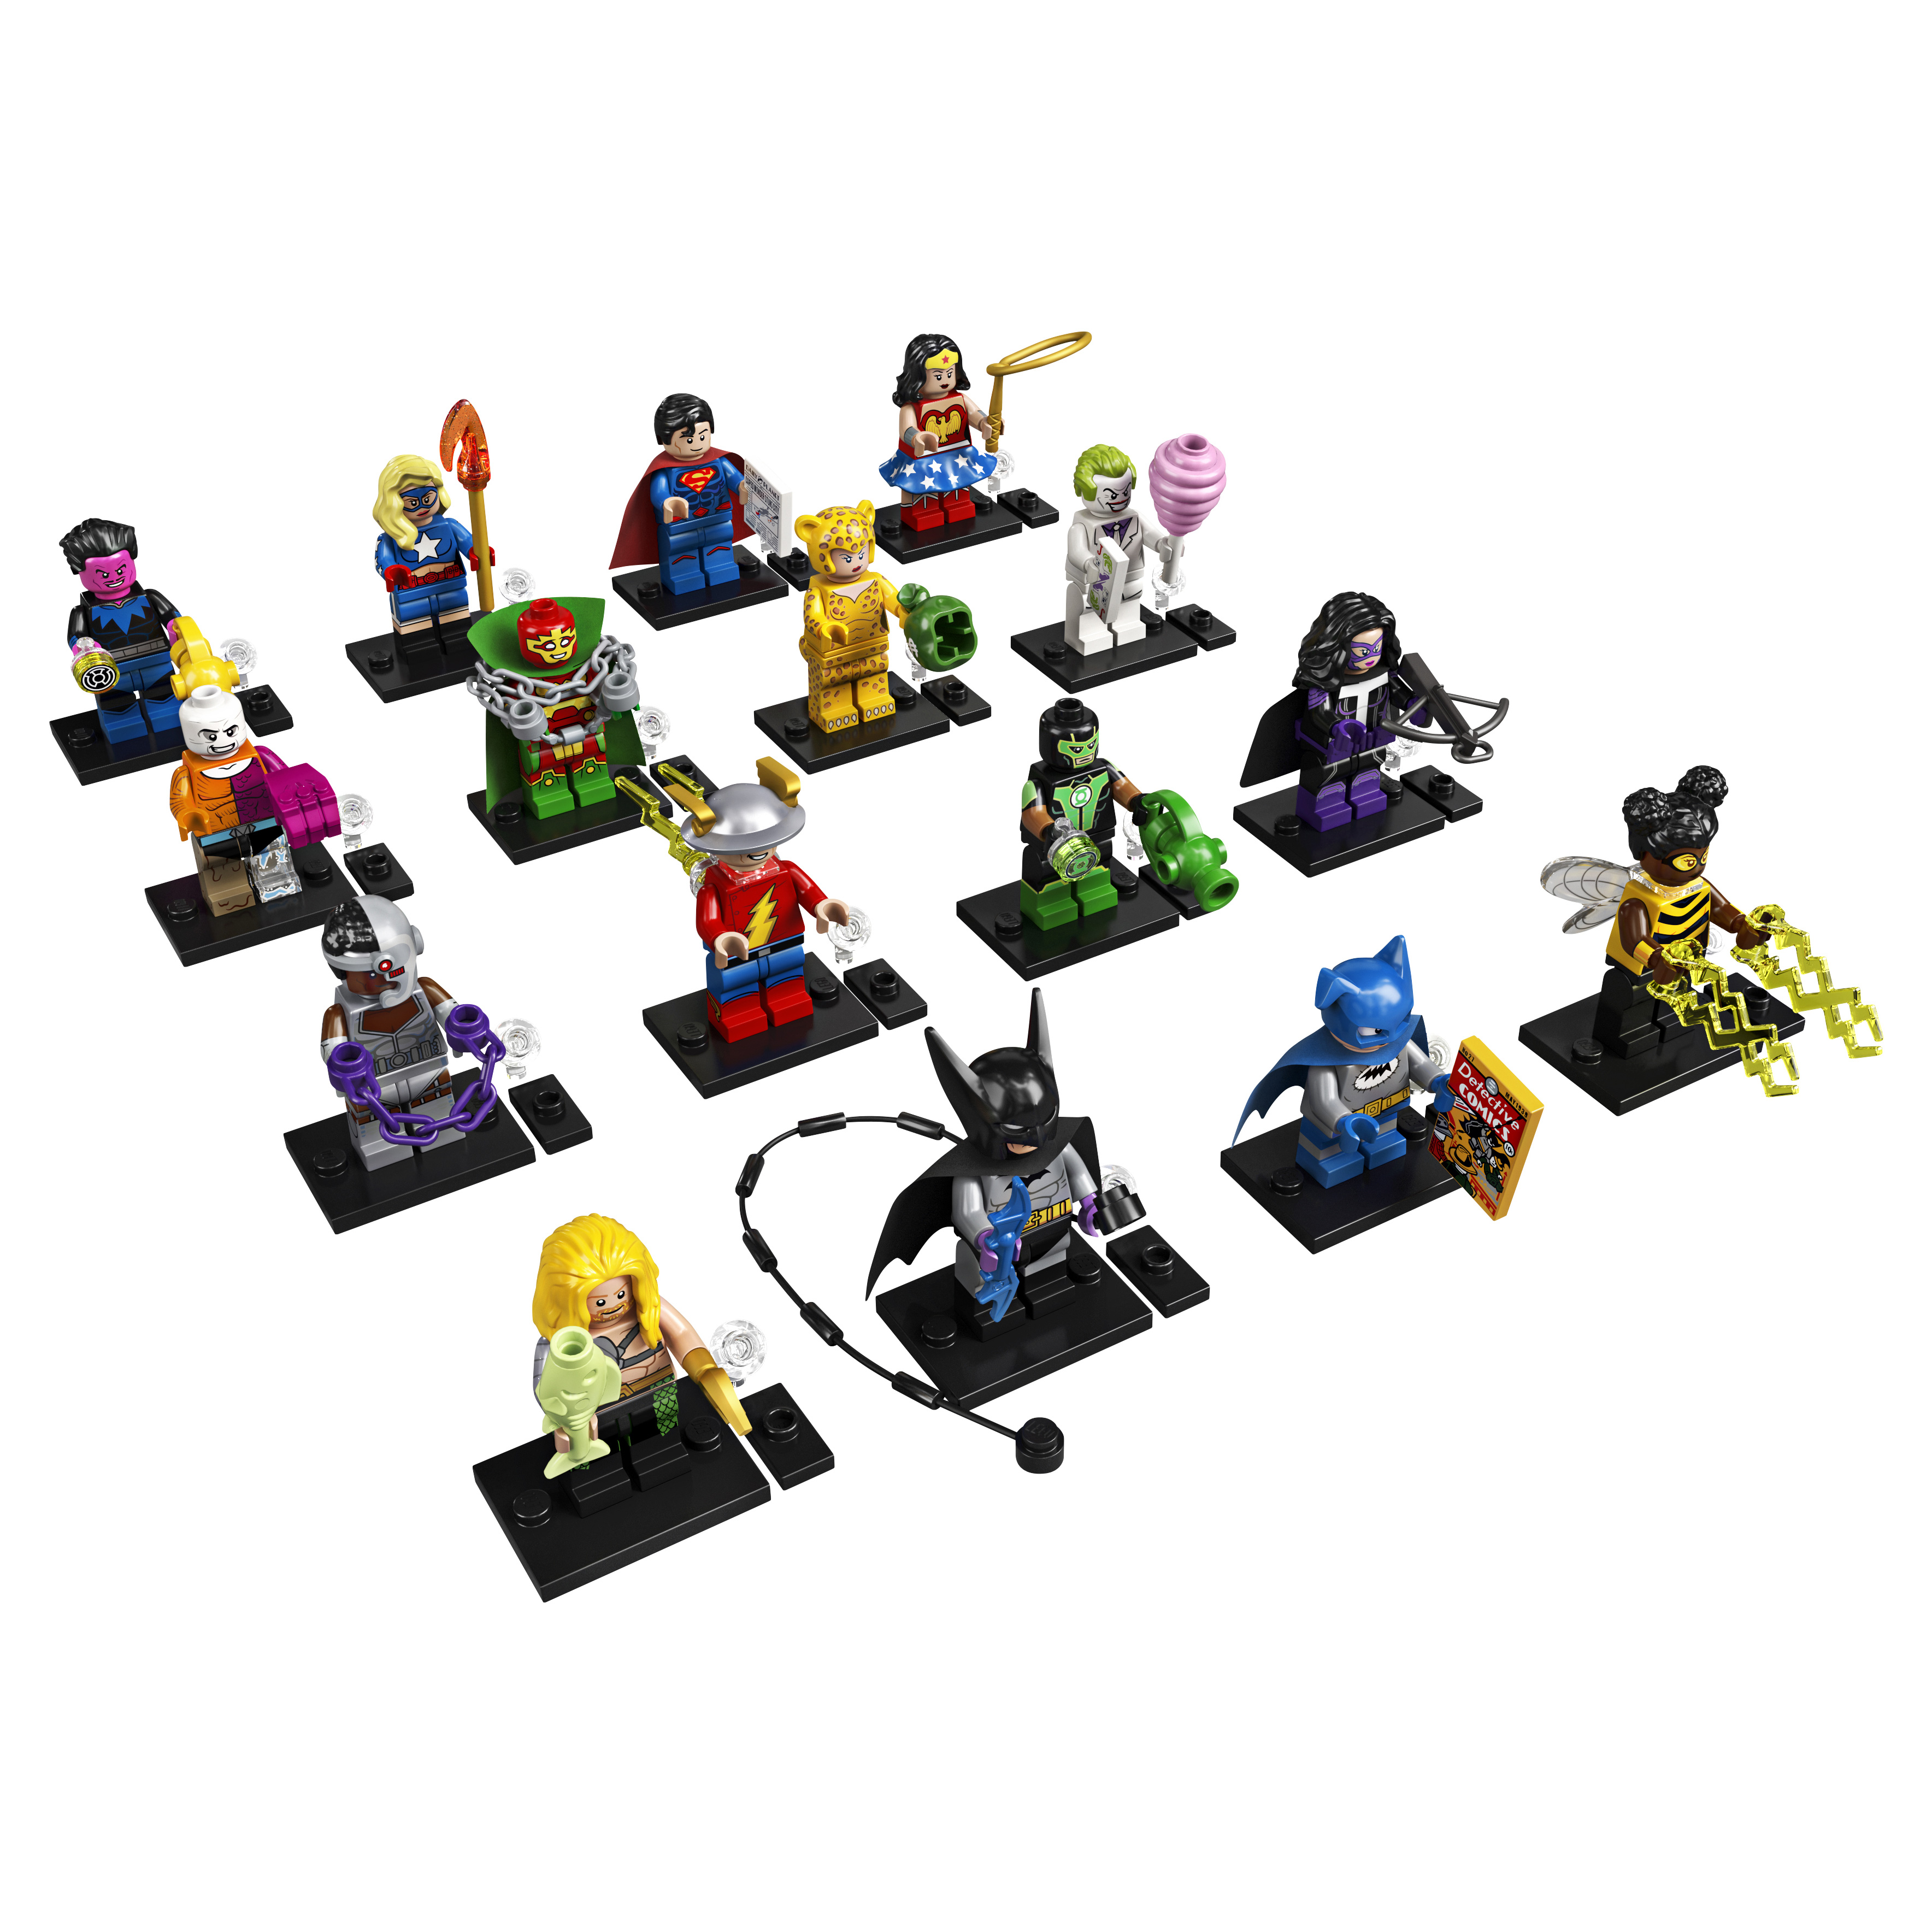 Конструктор LEGO Minifigures 71026 DC Super Heroes Series конструктор td tumbling super track racer 89903 mix